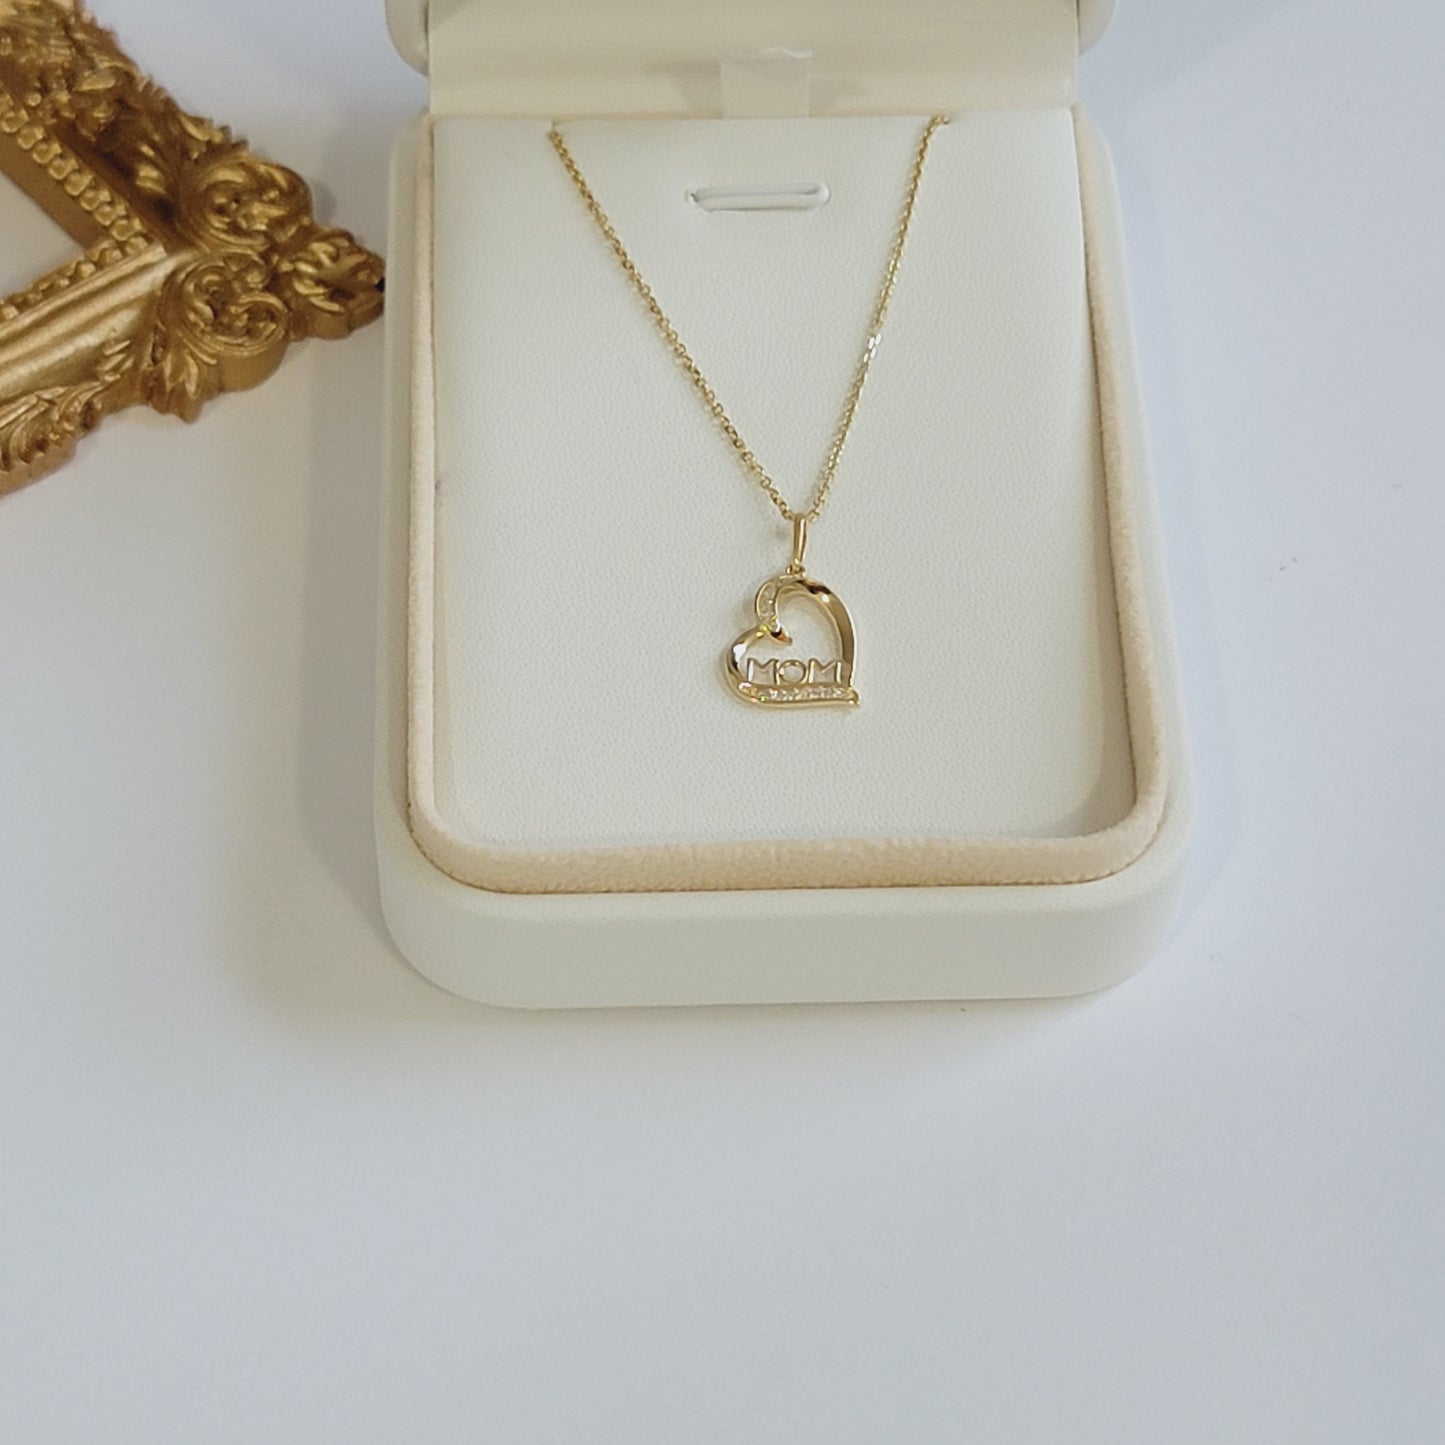 14K Solid Gold Diamond Heart Pendant